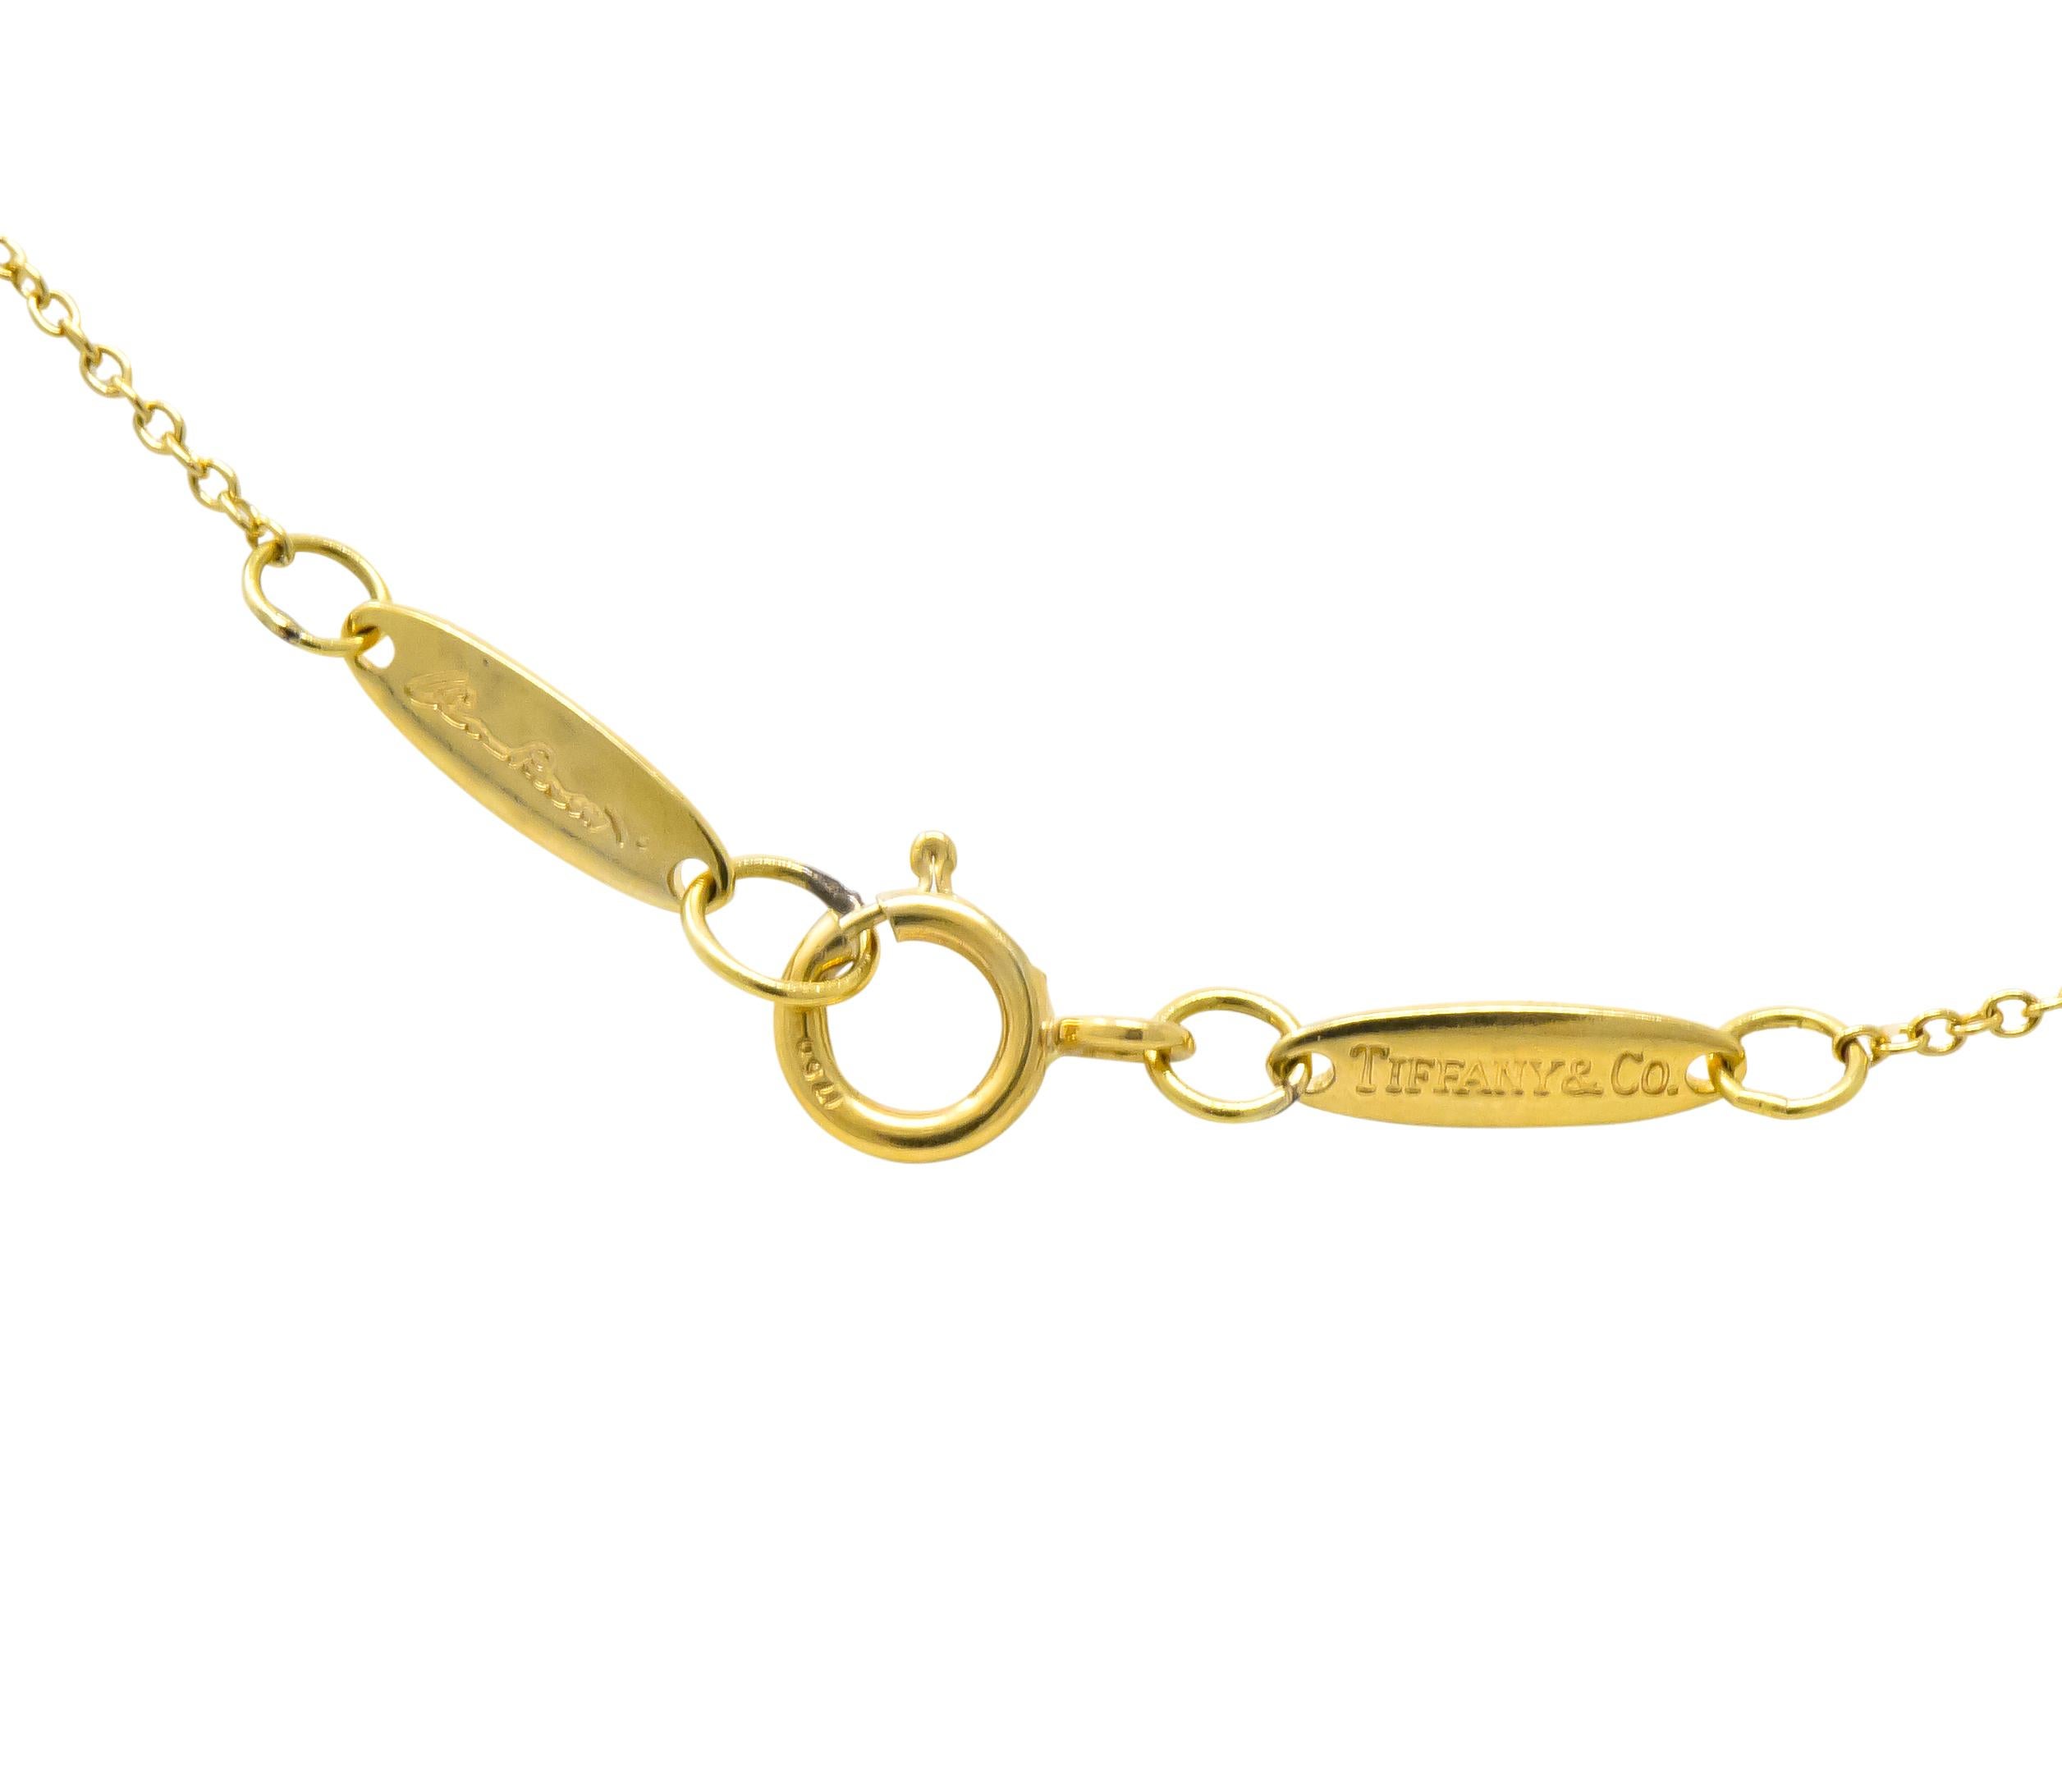 Women's or Men's Paloma Picasso Tiffany & Co. 18 Karat Gold Letter K Pendant Necklace